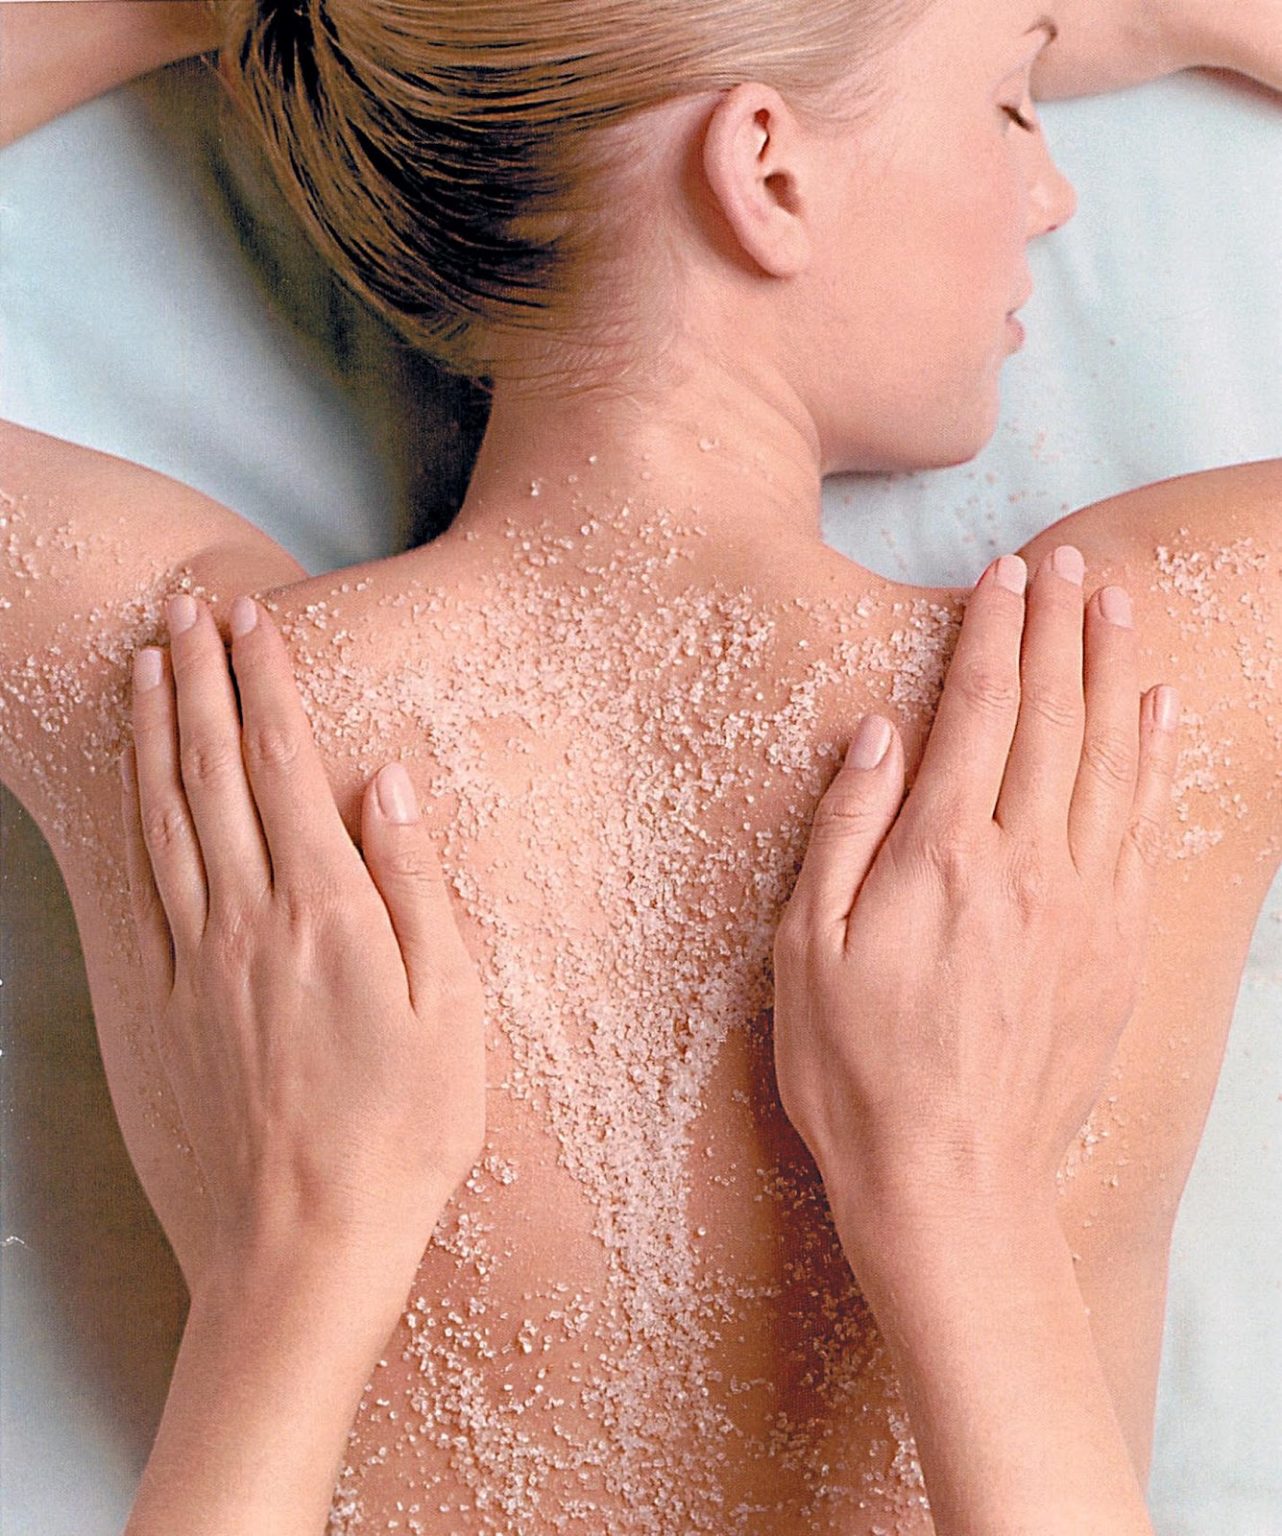 A woman having a bodyscrub at a spa